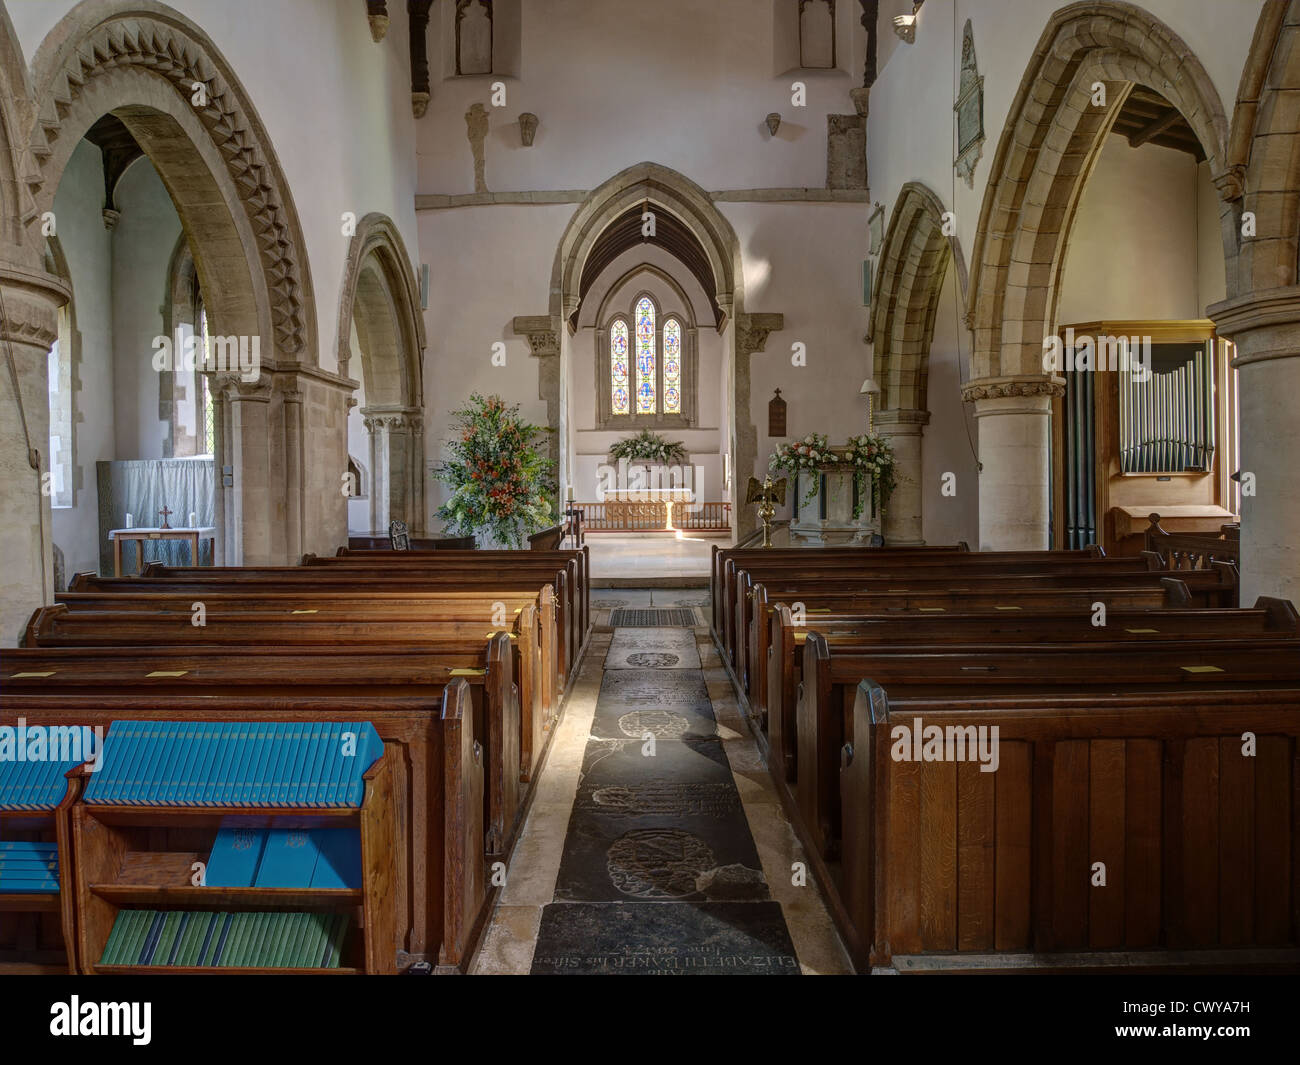 St Mary's Church, Bibury, Gloucestershire Foto de stock